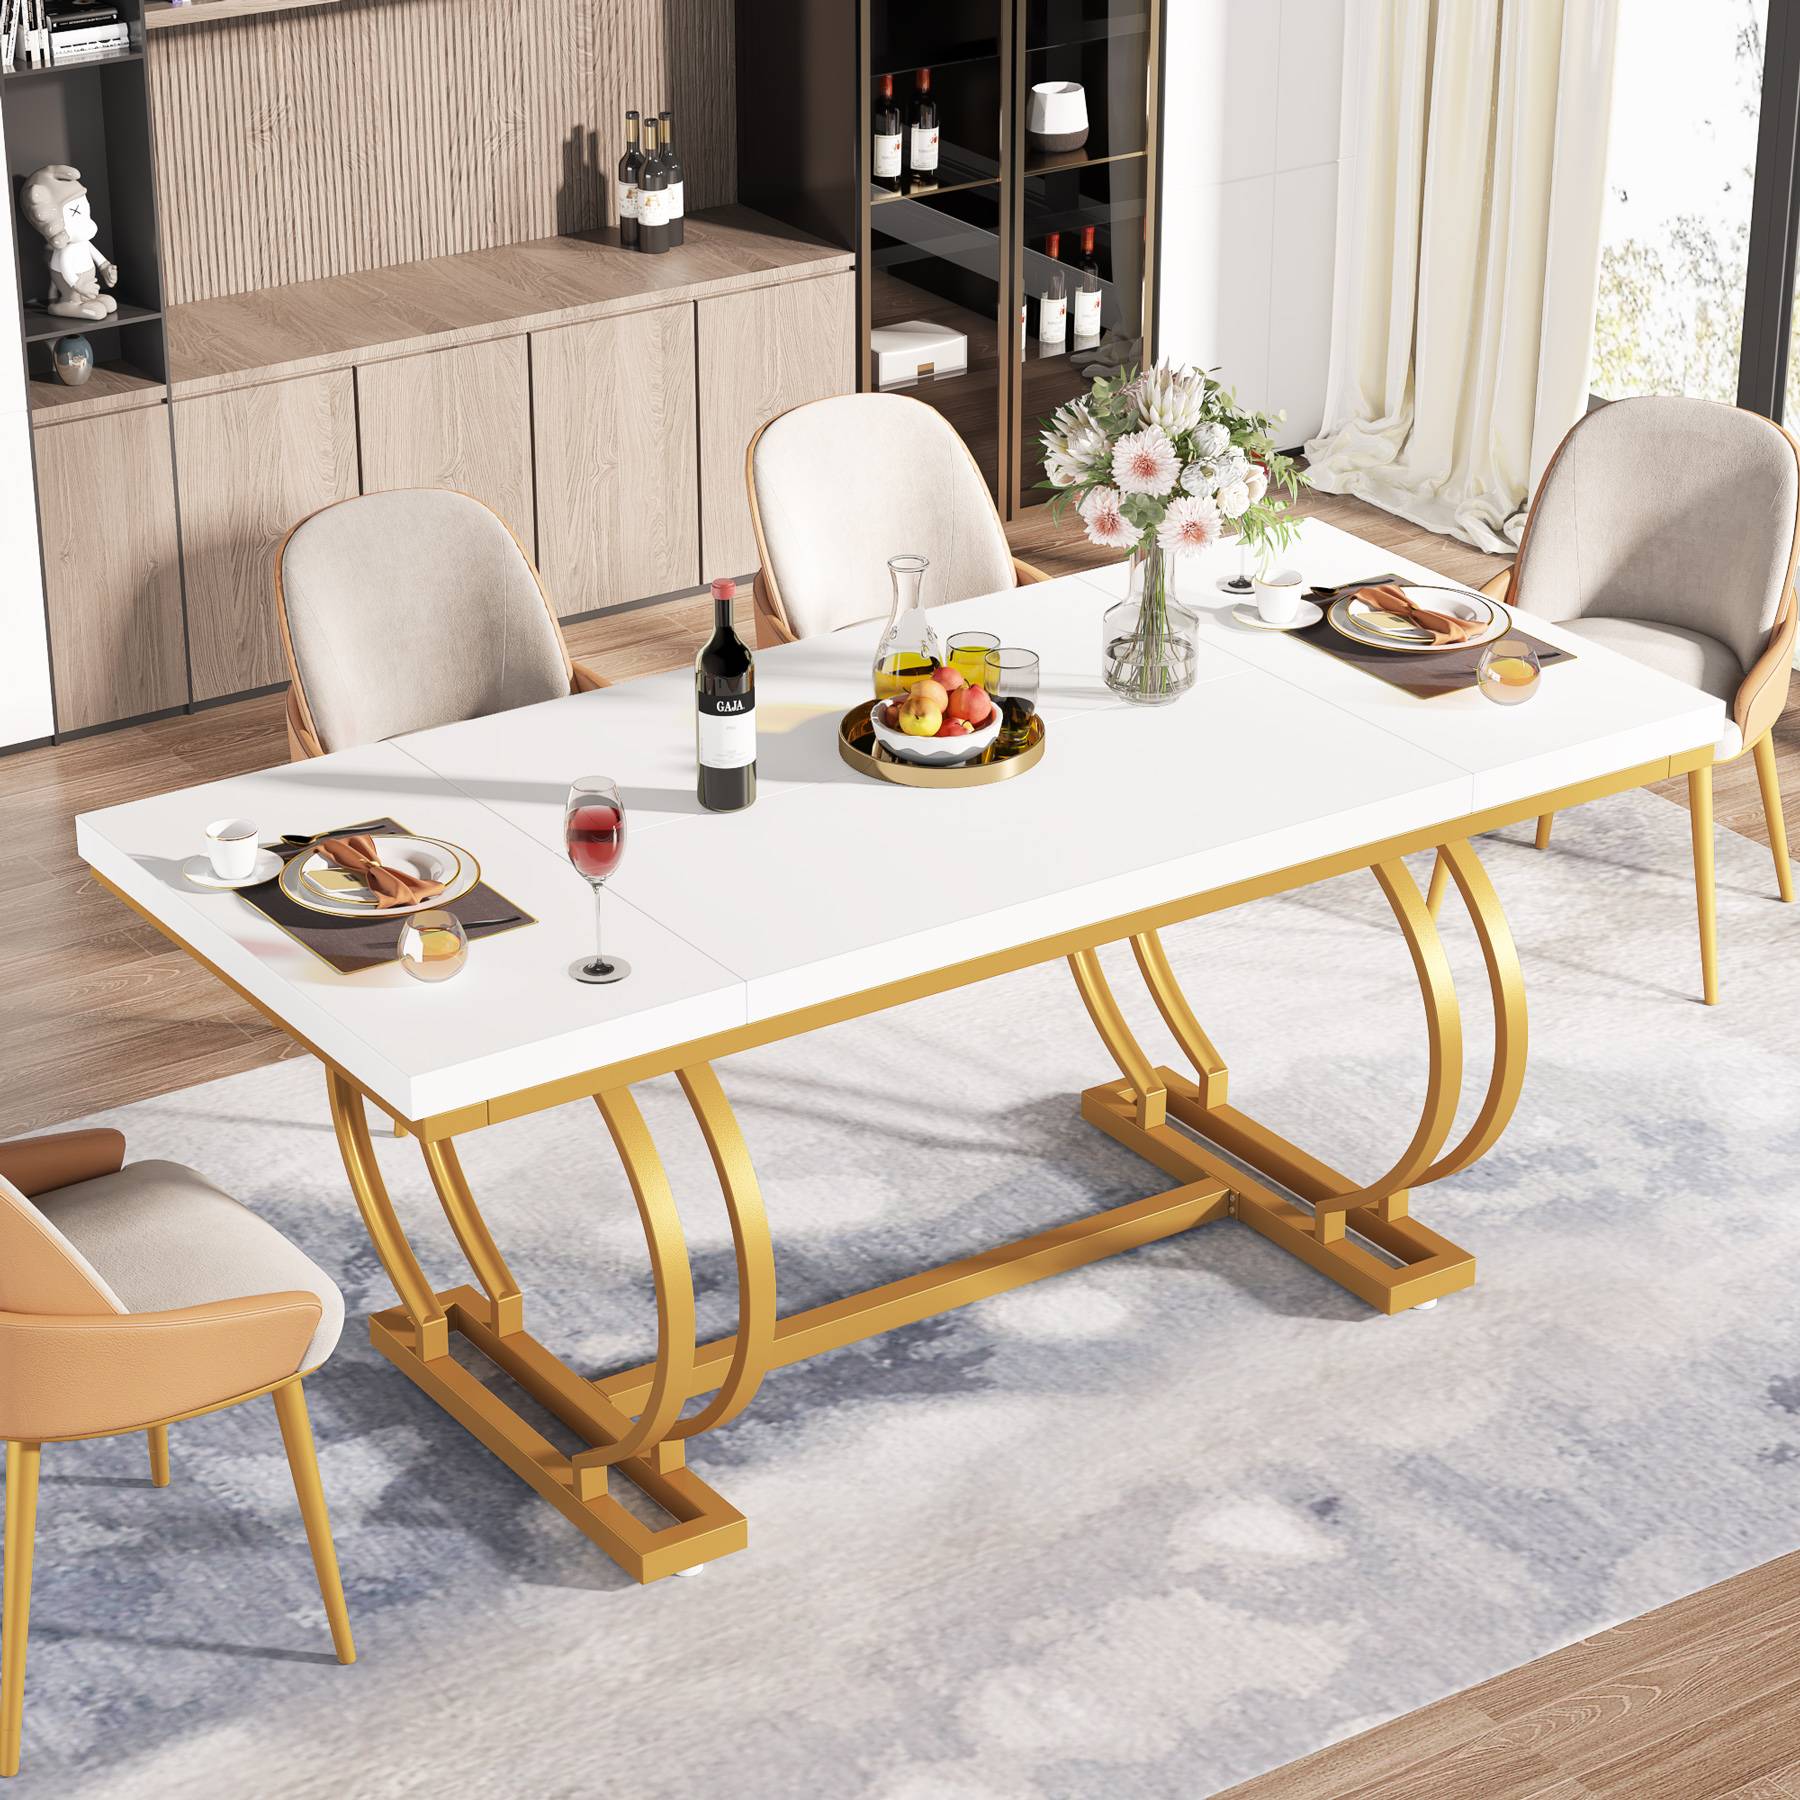 Retmen Modern Dining Room Table for 6 People - Cream